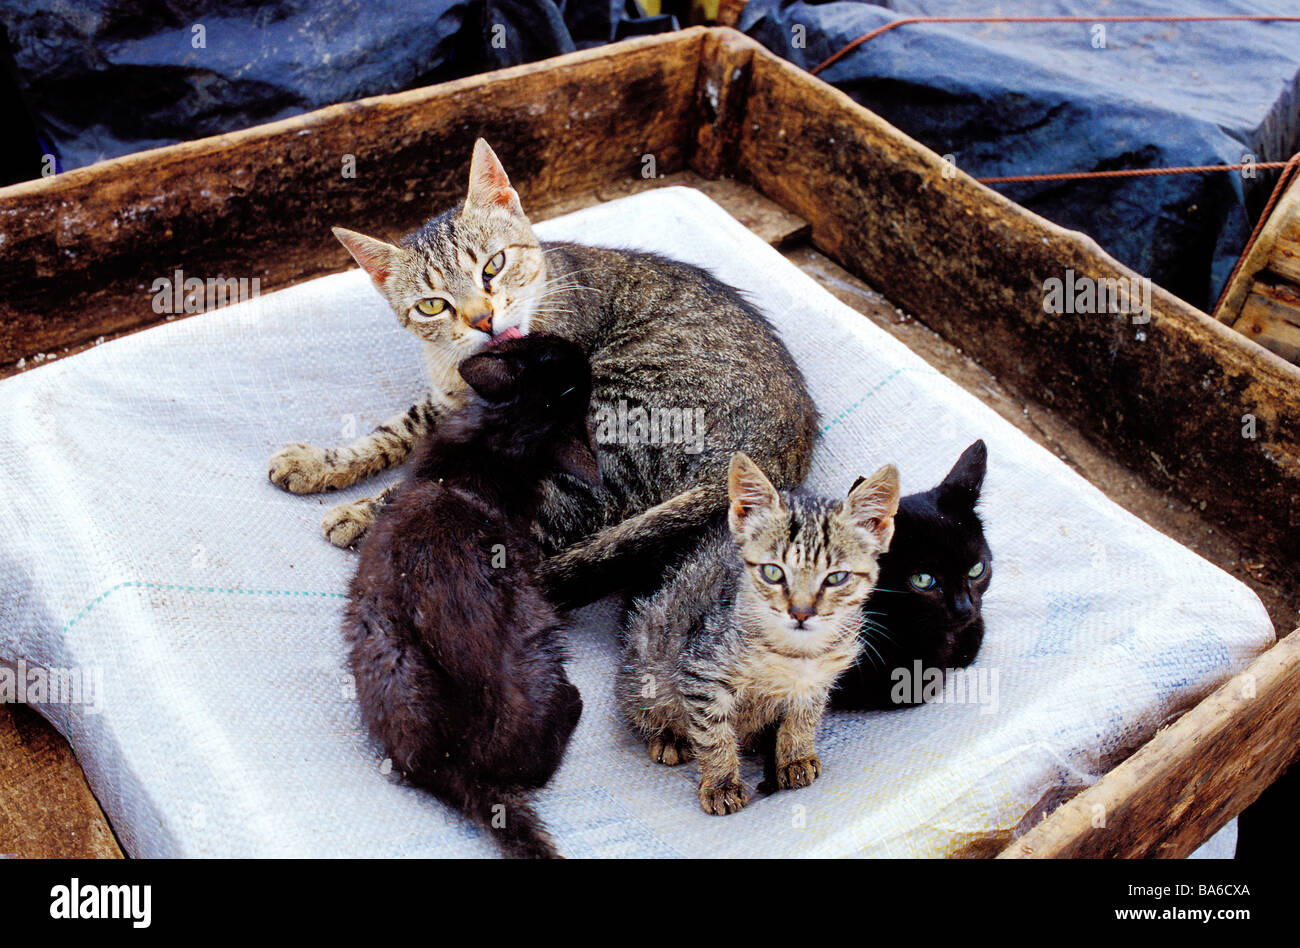 Morocco, Essaouira, mother cat licking her babies Stock Photo